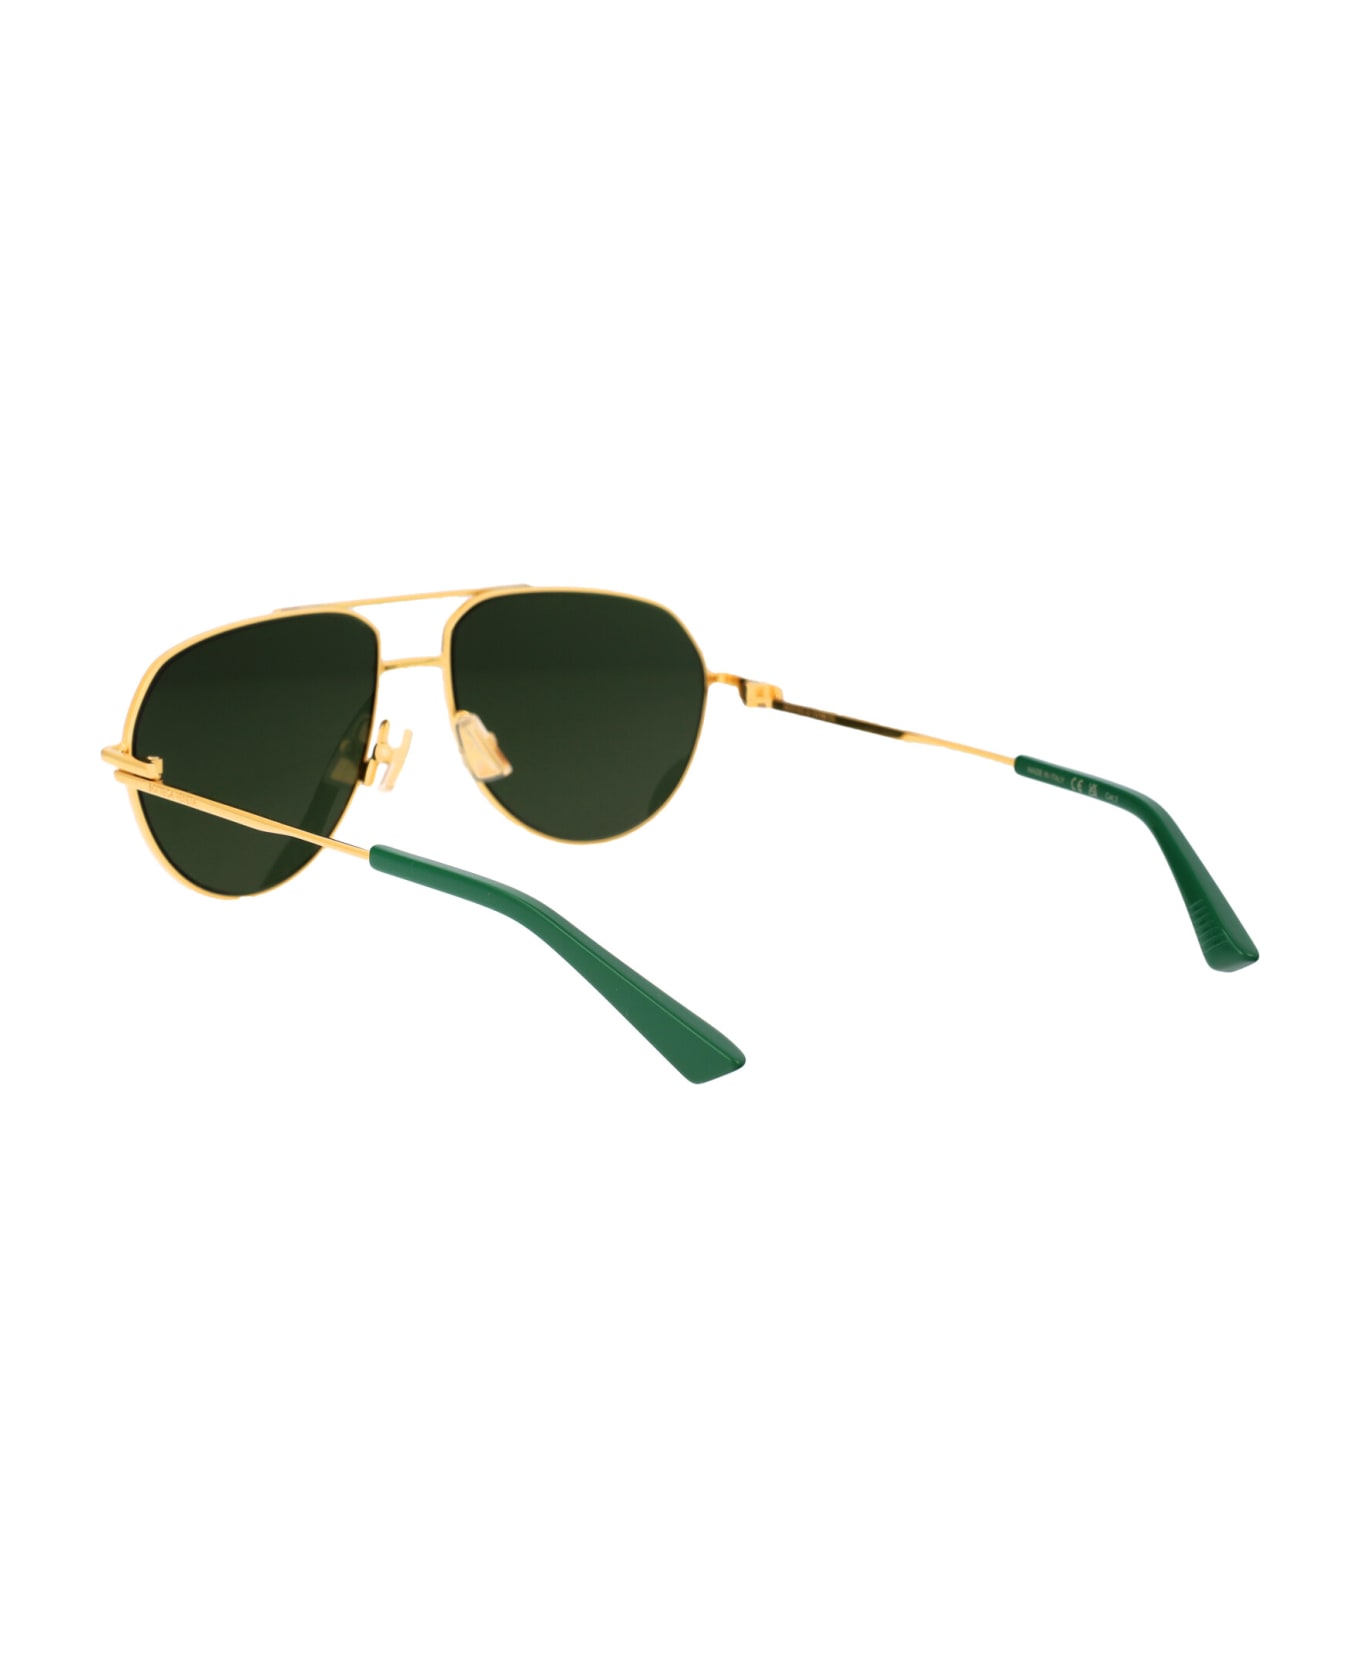 Bottega Veneta Eyewear Bv1302s Sunglasses - 003 GOLD GOLD GREEN